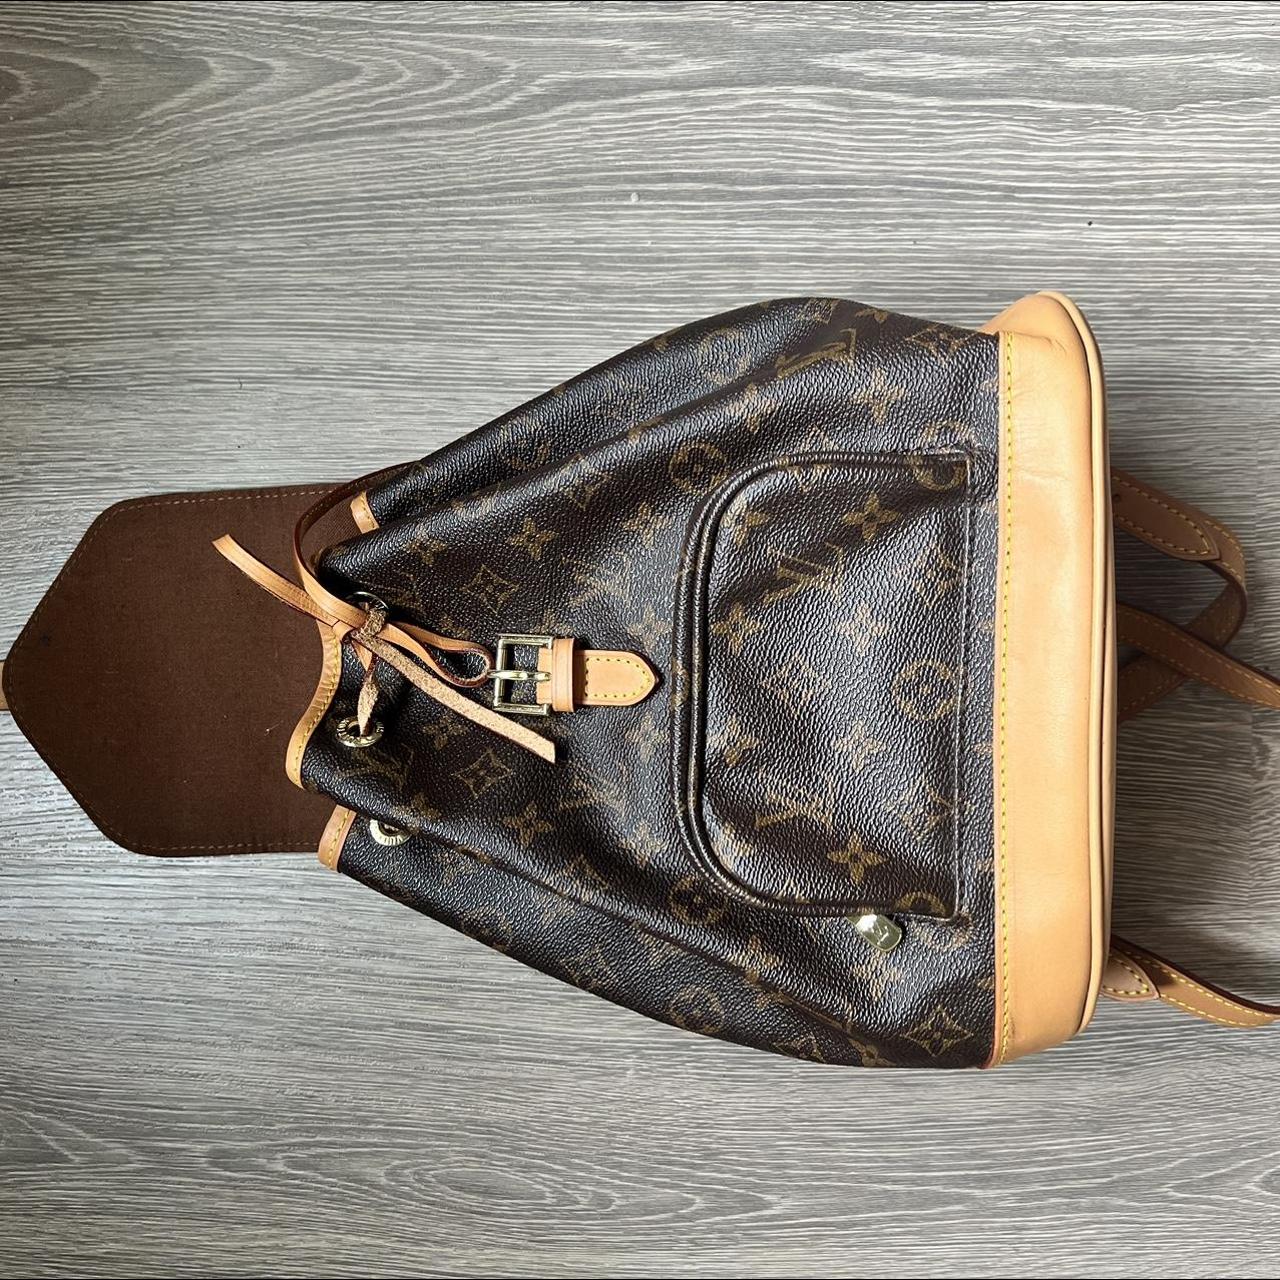 Louis Vuitton backpack - great deal as one part... - Depop